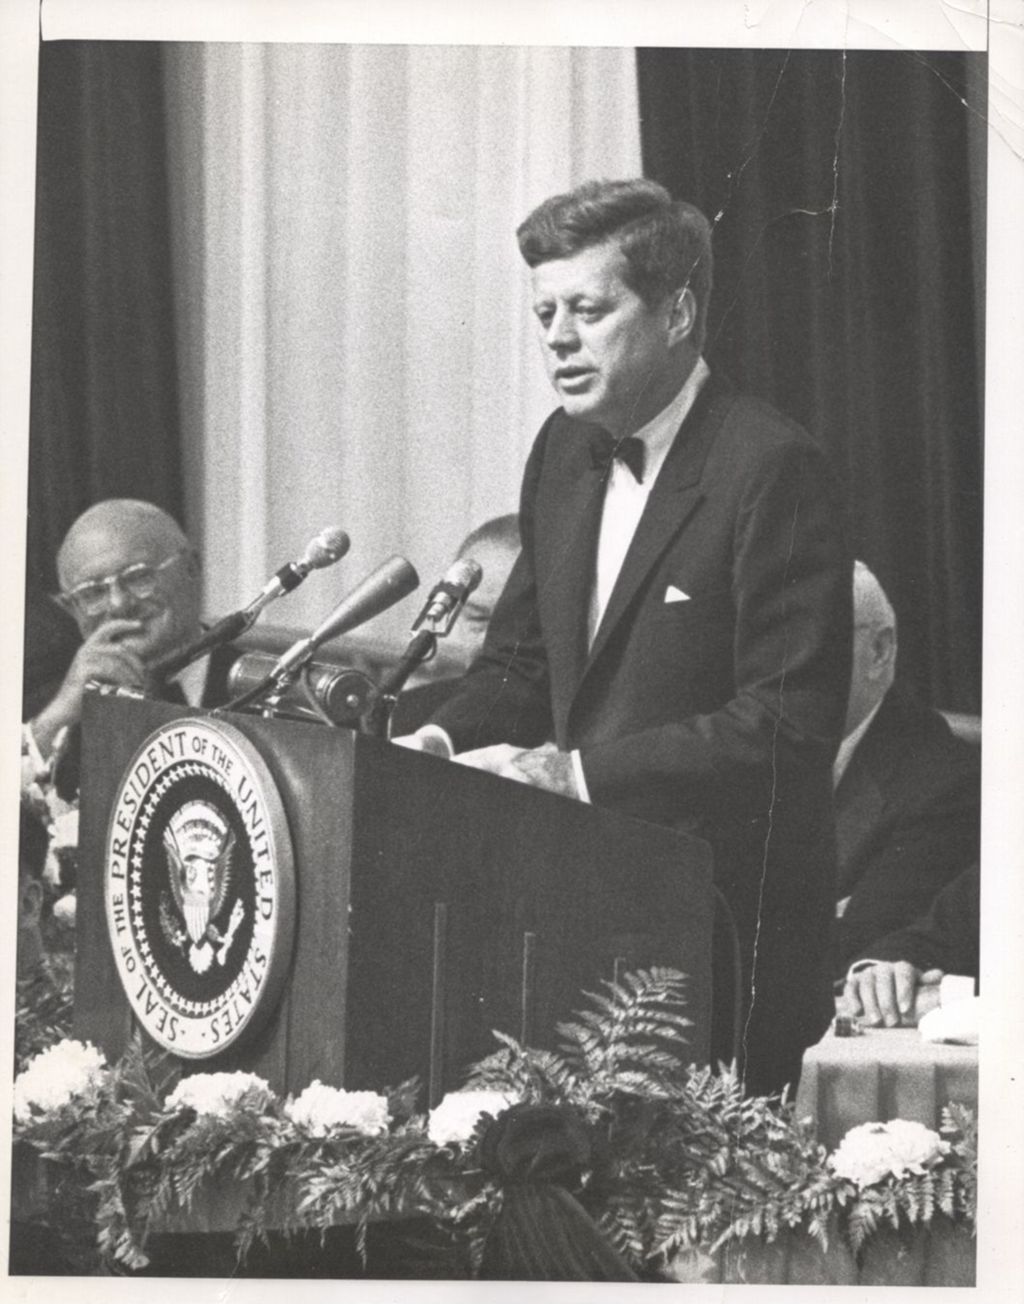 Miniature of John F. Kennedy speaking at Democratic fundraising dinner